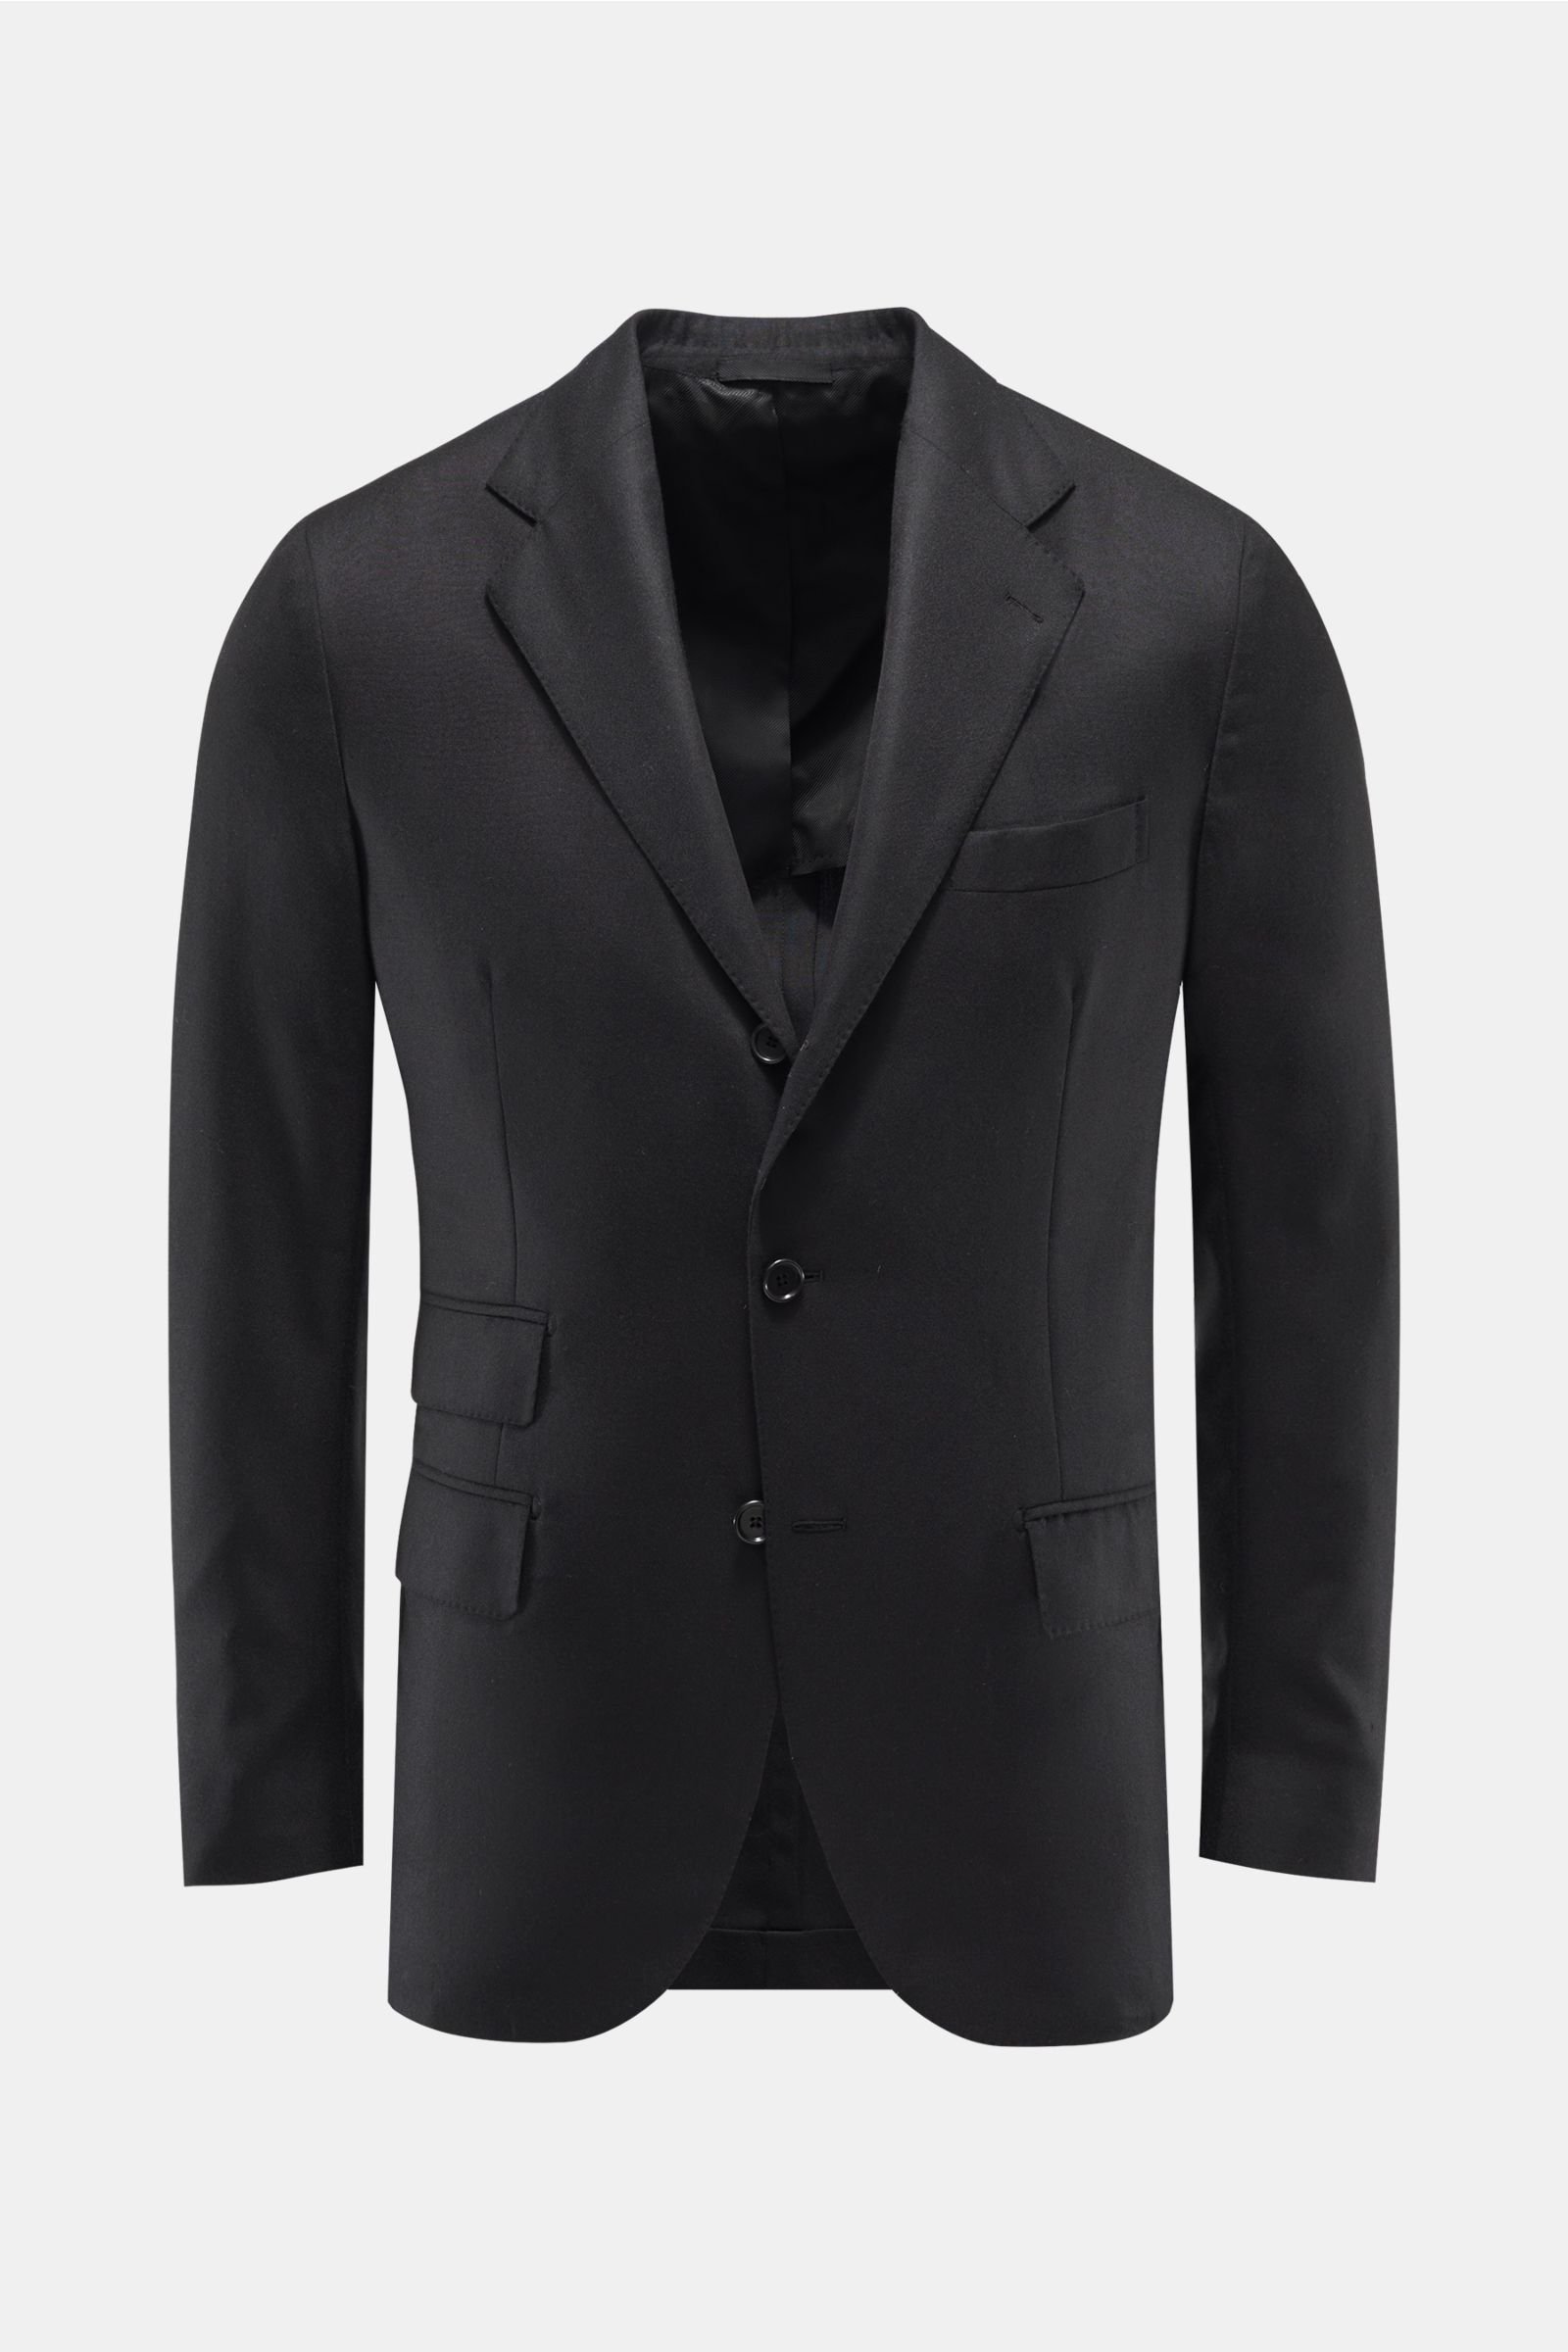 Cashmere smart-casual jacket 'Napoli' black